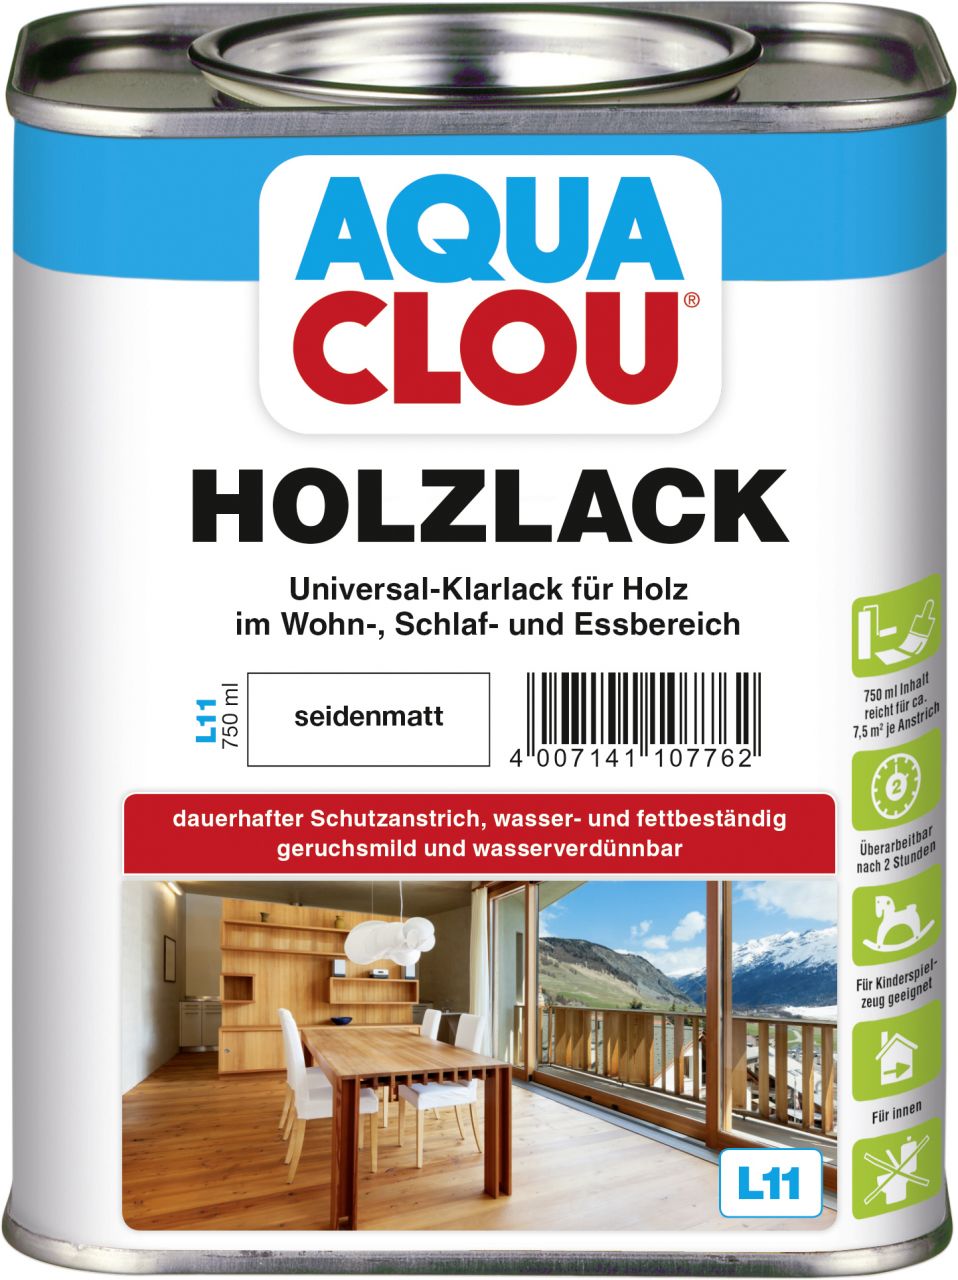 Aqua Clou Holzlack L11 750 ml seidenmatt von Aqua Clou